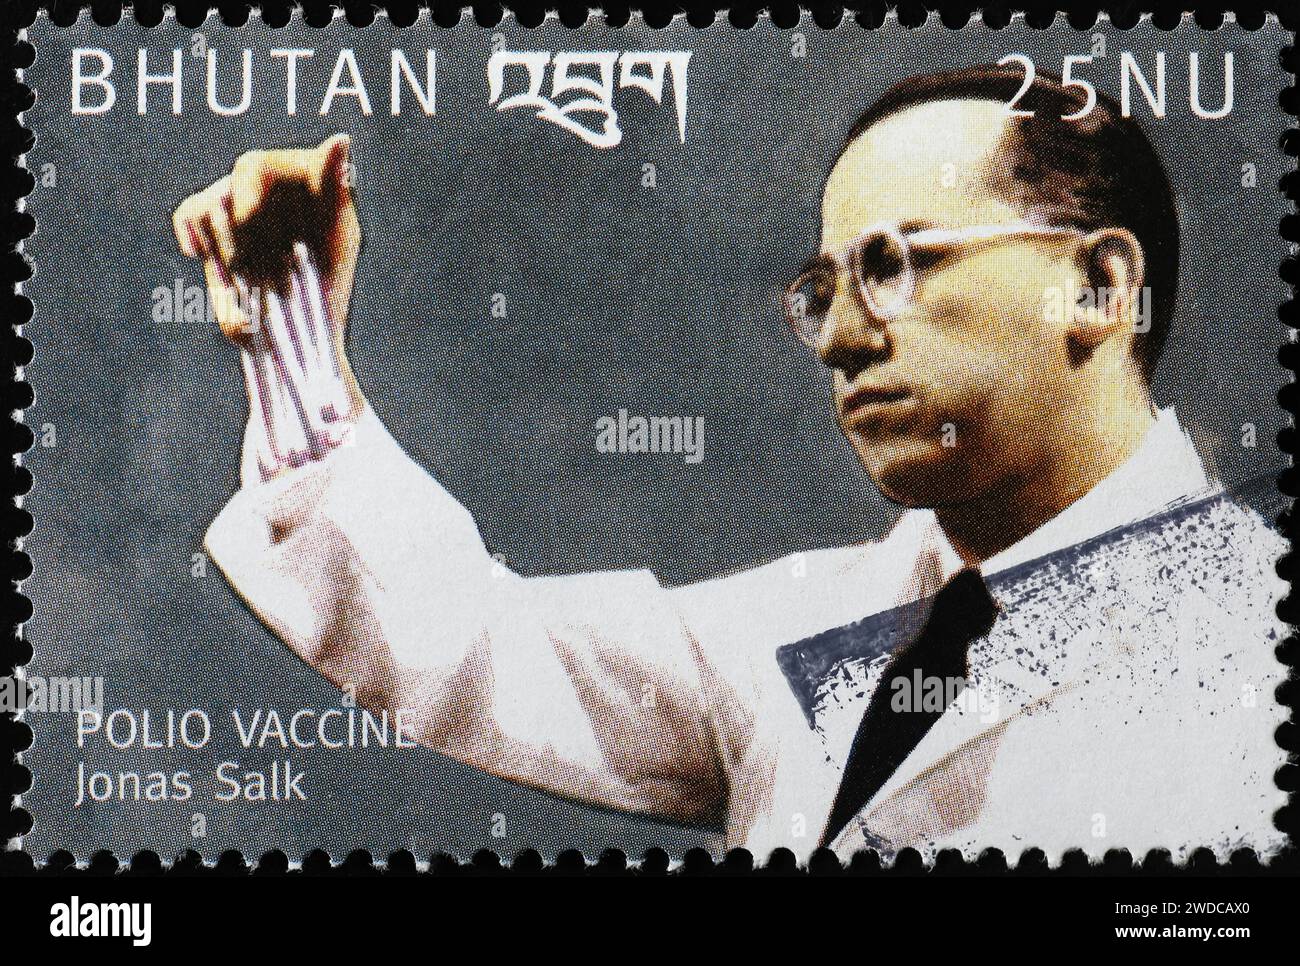 Discoverer of the polio vaccin Jonas Salk on stamp Stock Photo